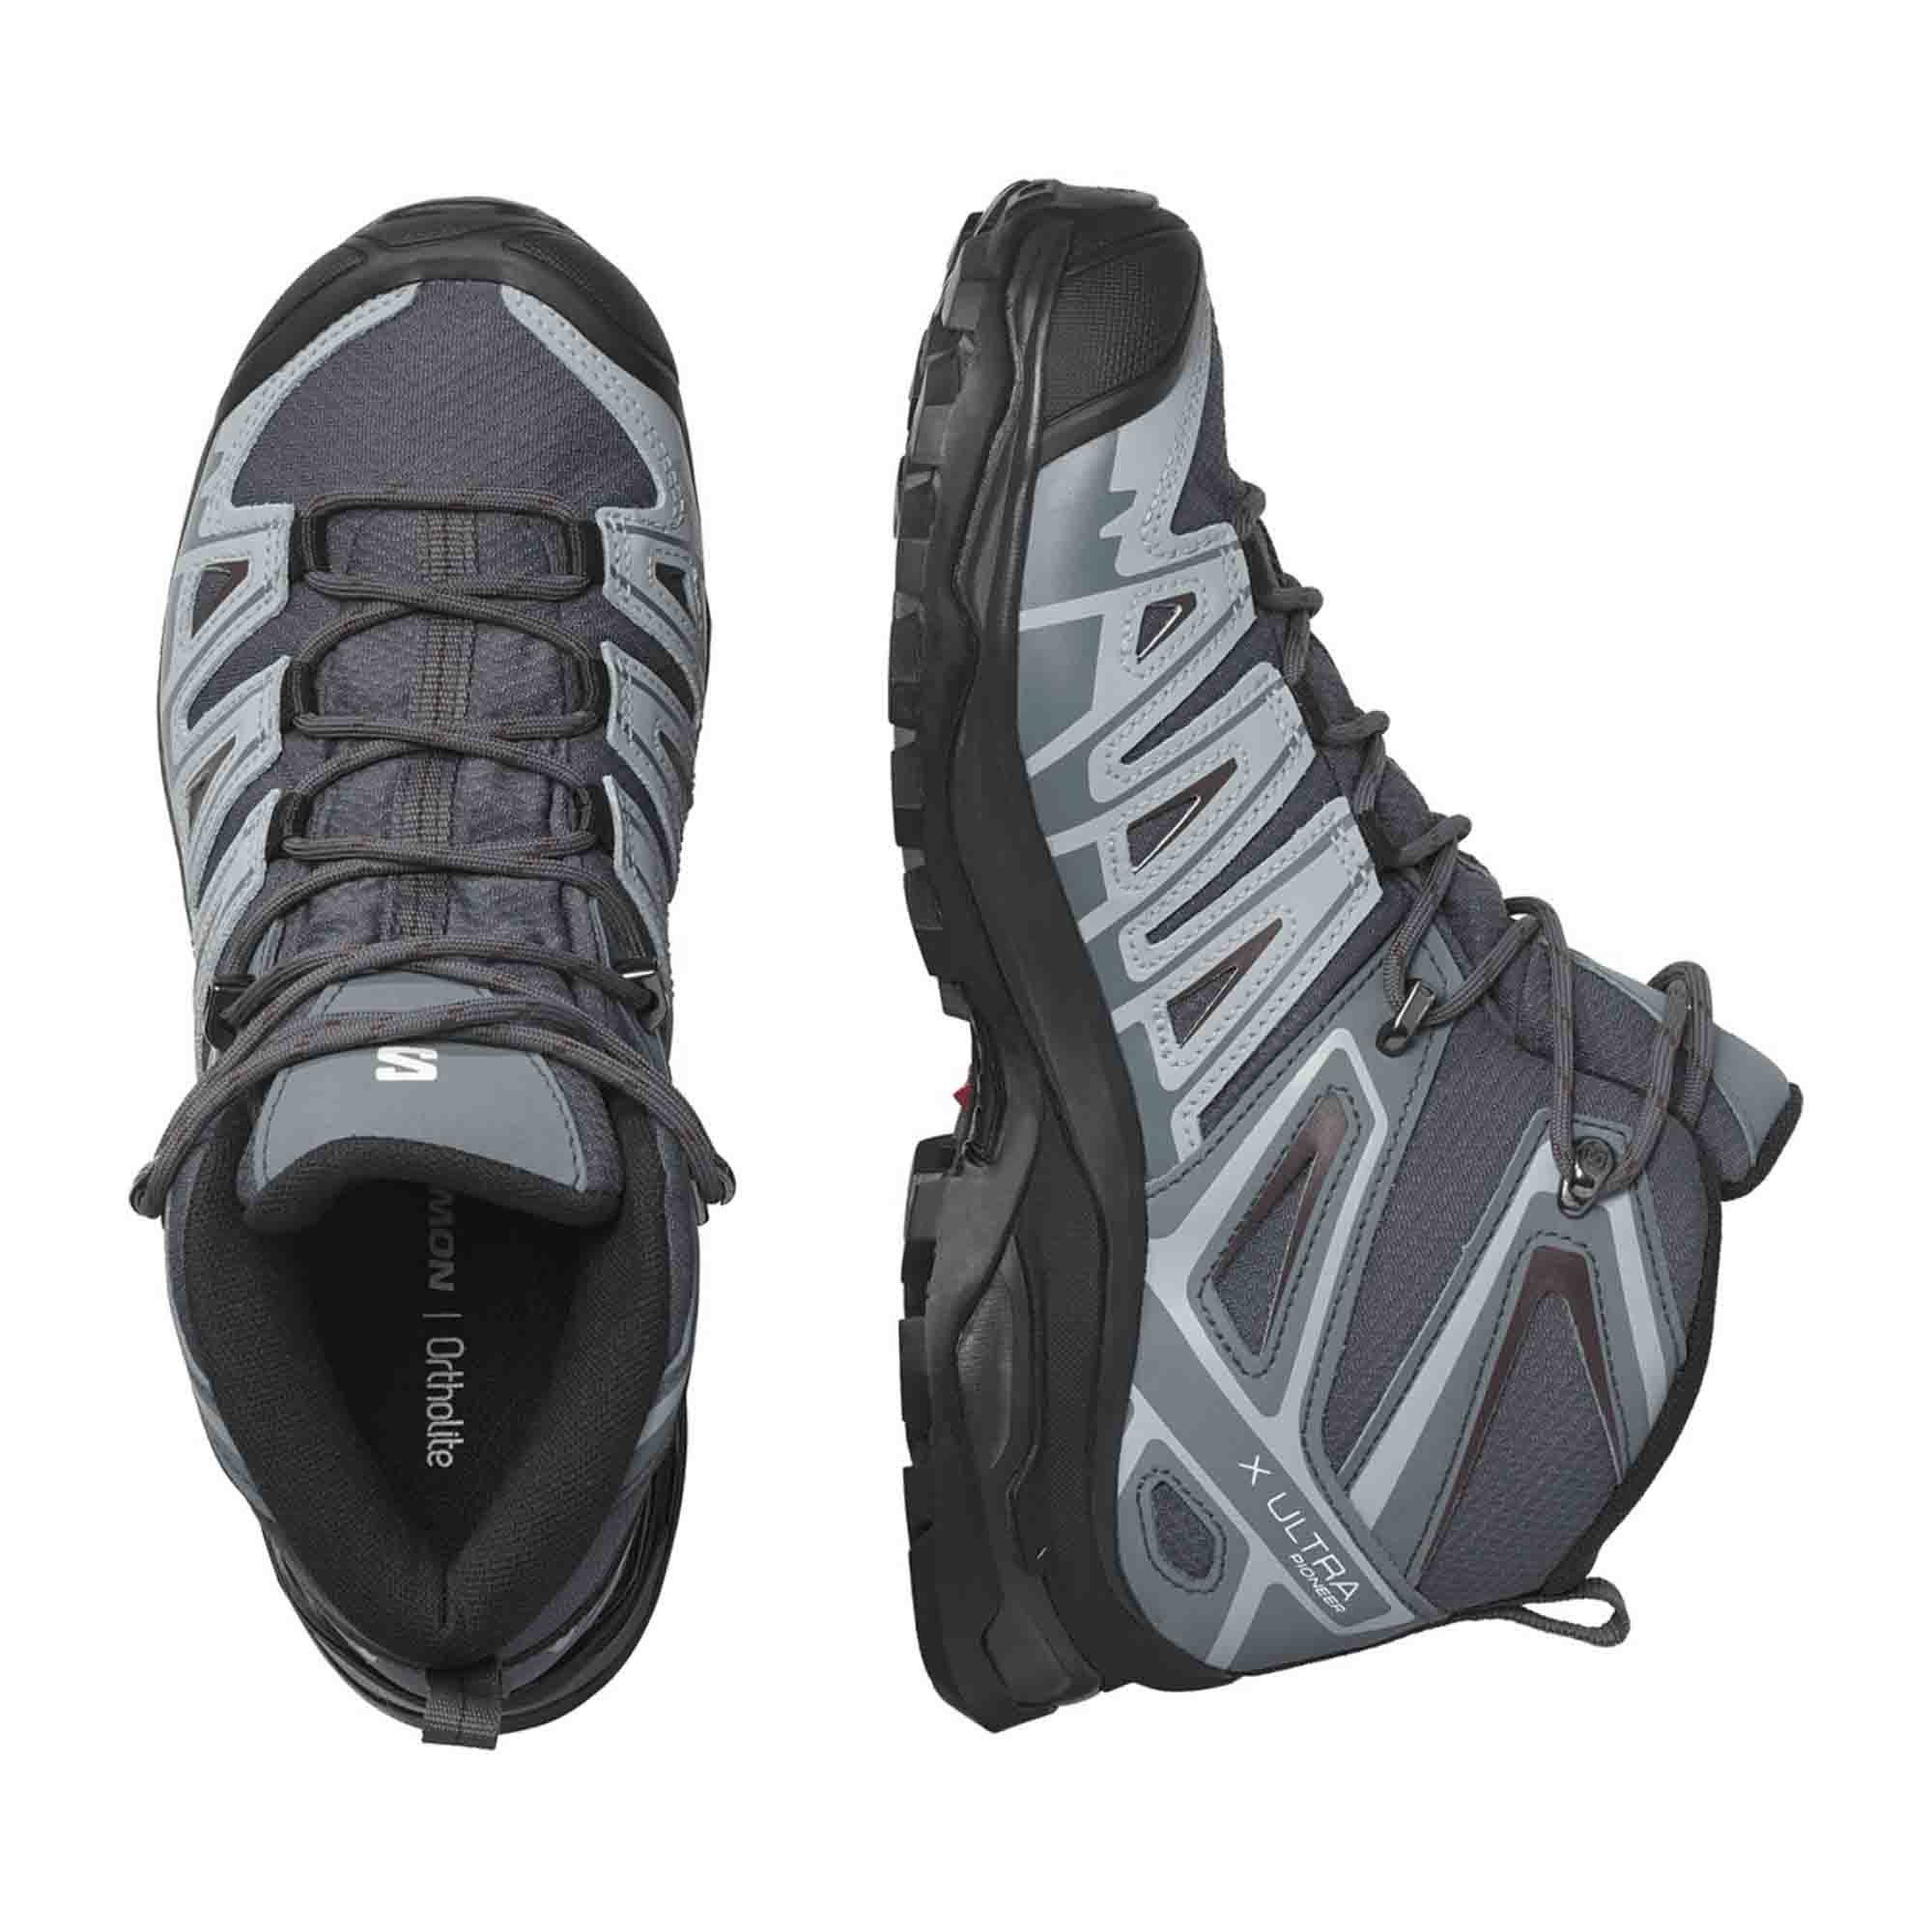 Salomon shoes X ULTRA PIONEER MID GTX for women, gray